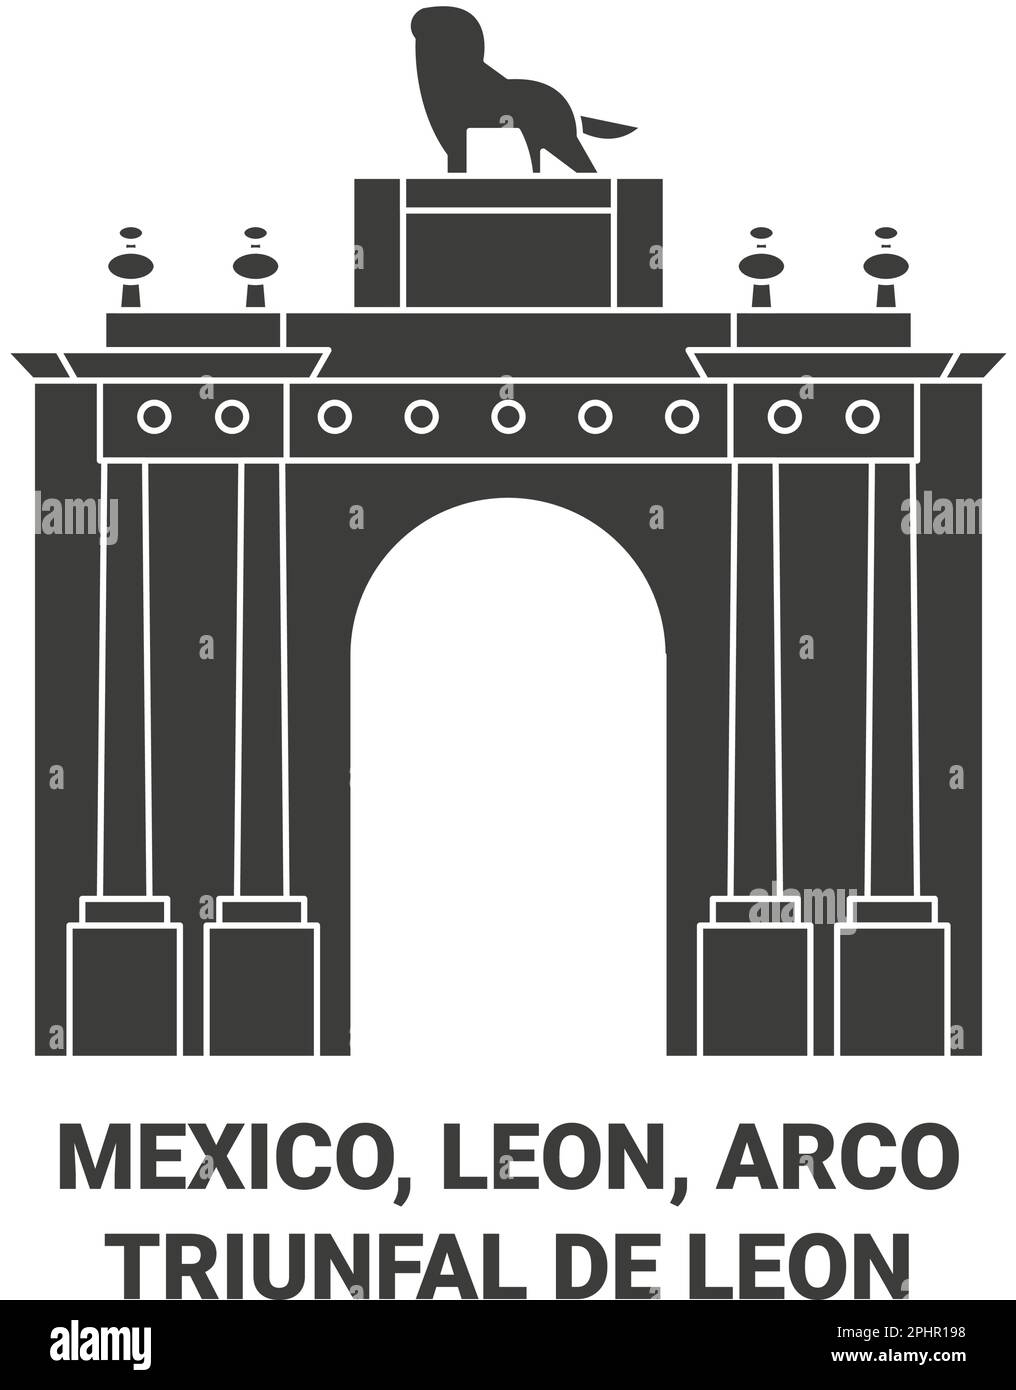 Mexiko, Leon, Arco Triunfal De Leon Reise-Wahrzeichen-Vektordarstellung Stock Vektor